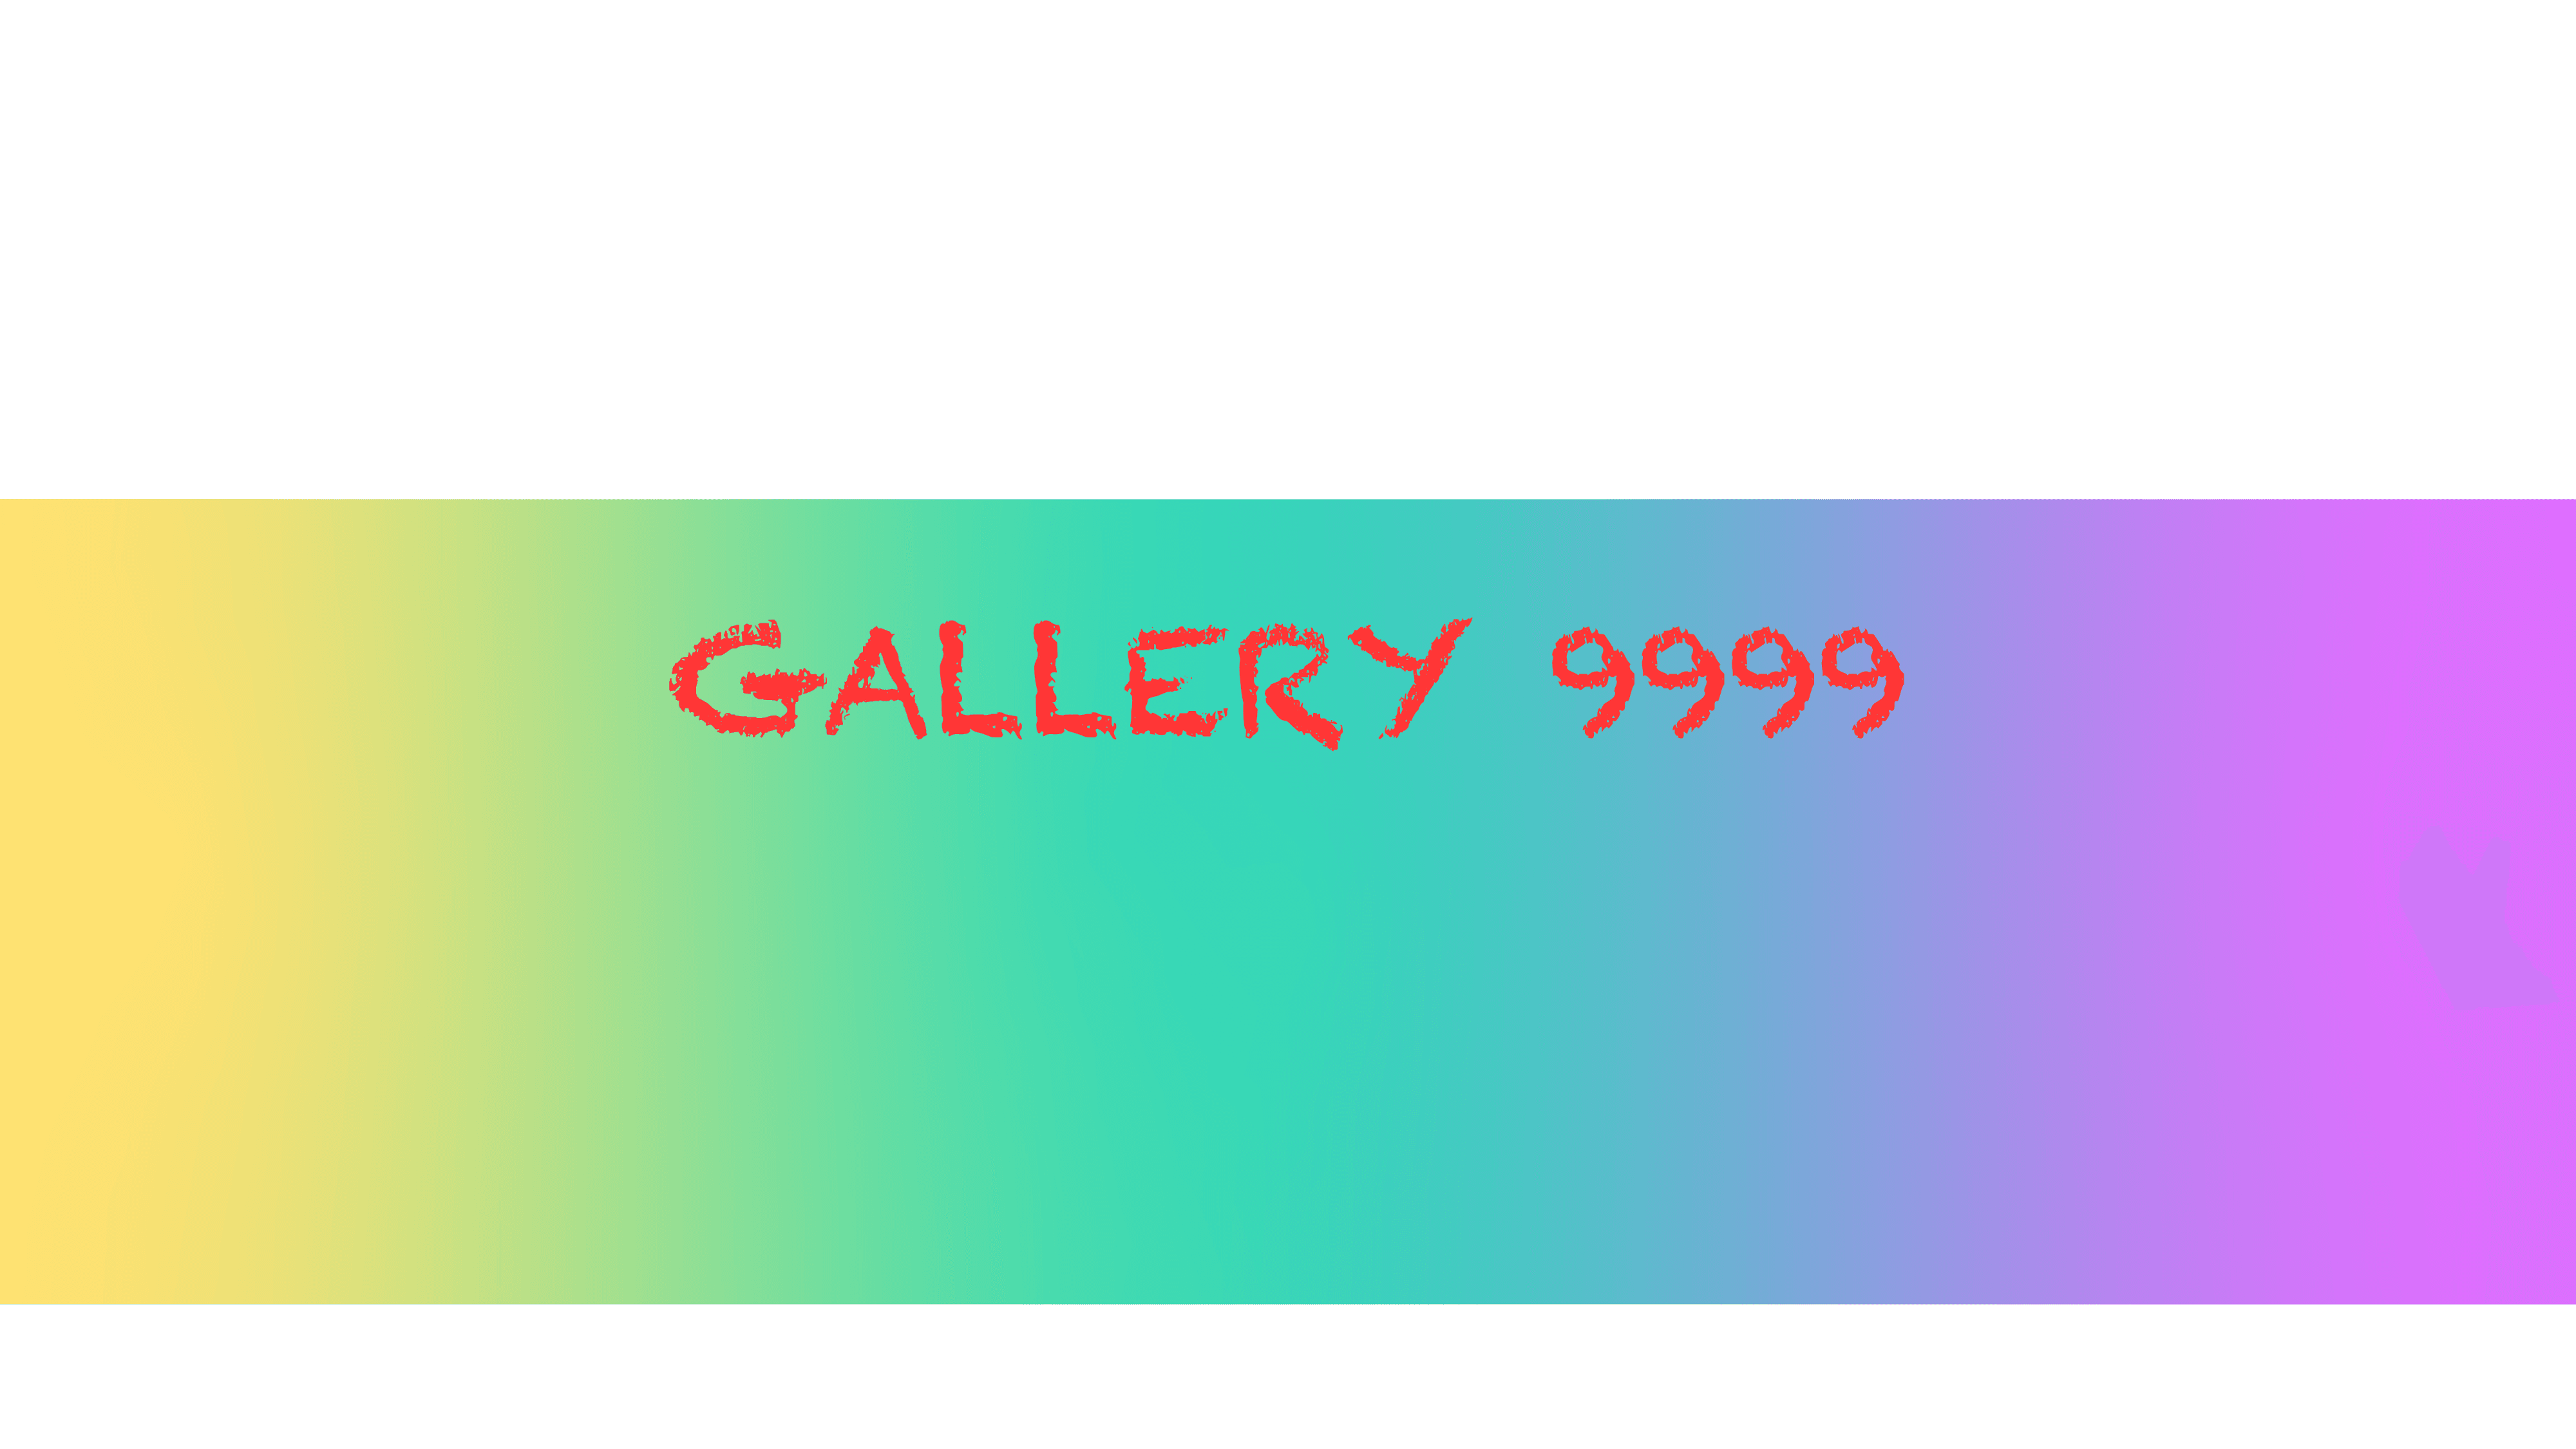 gallery9999 banner